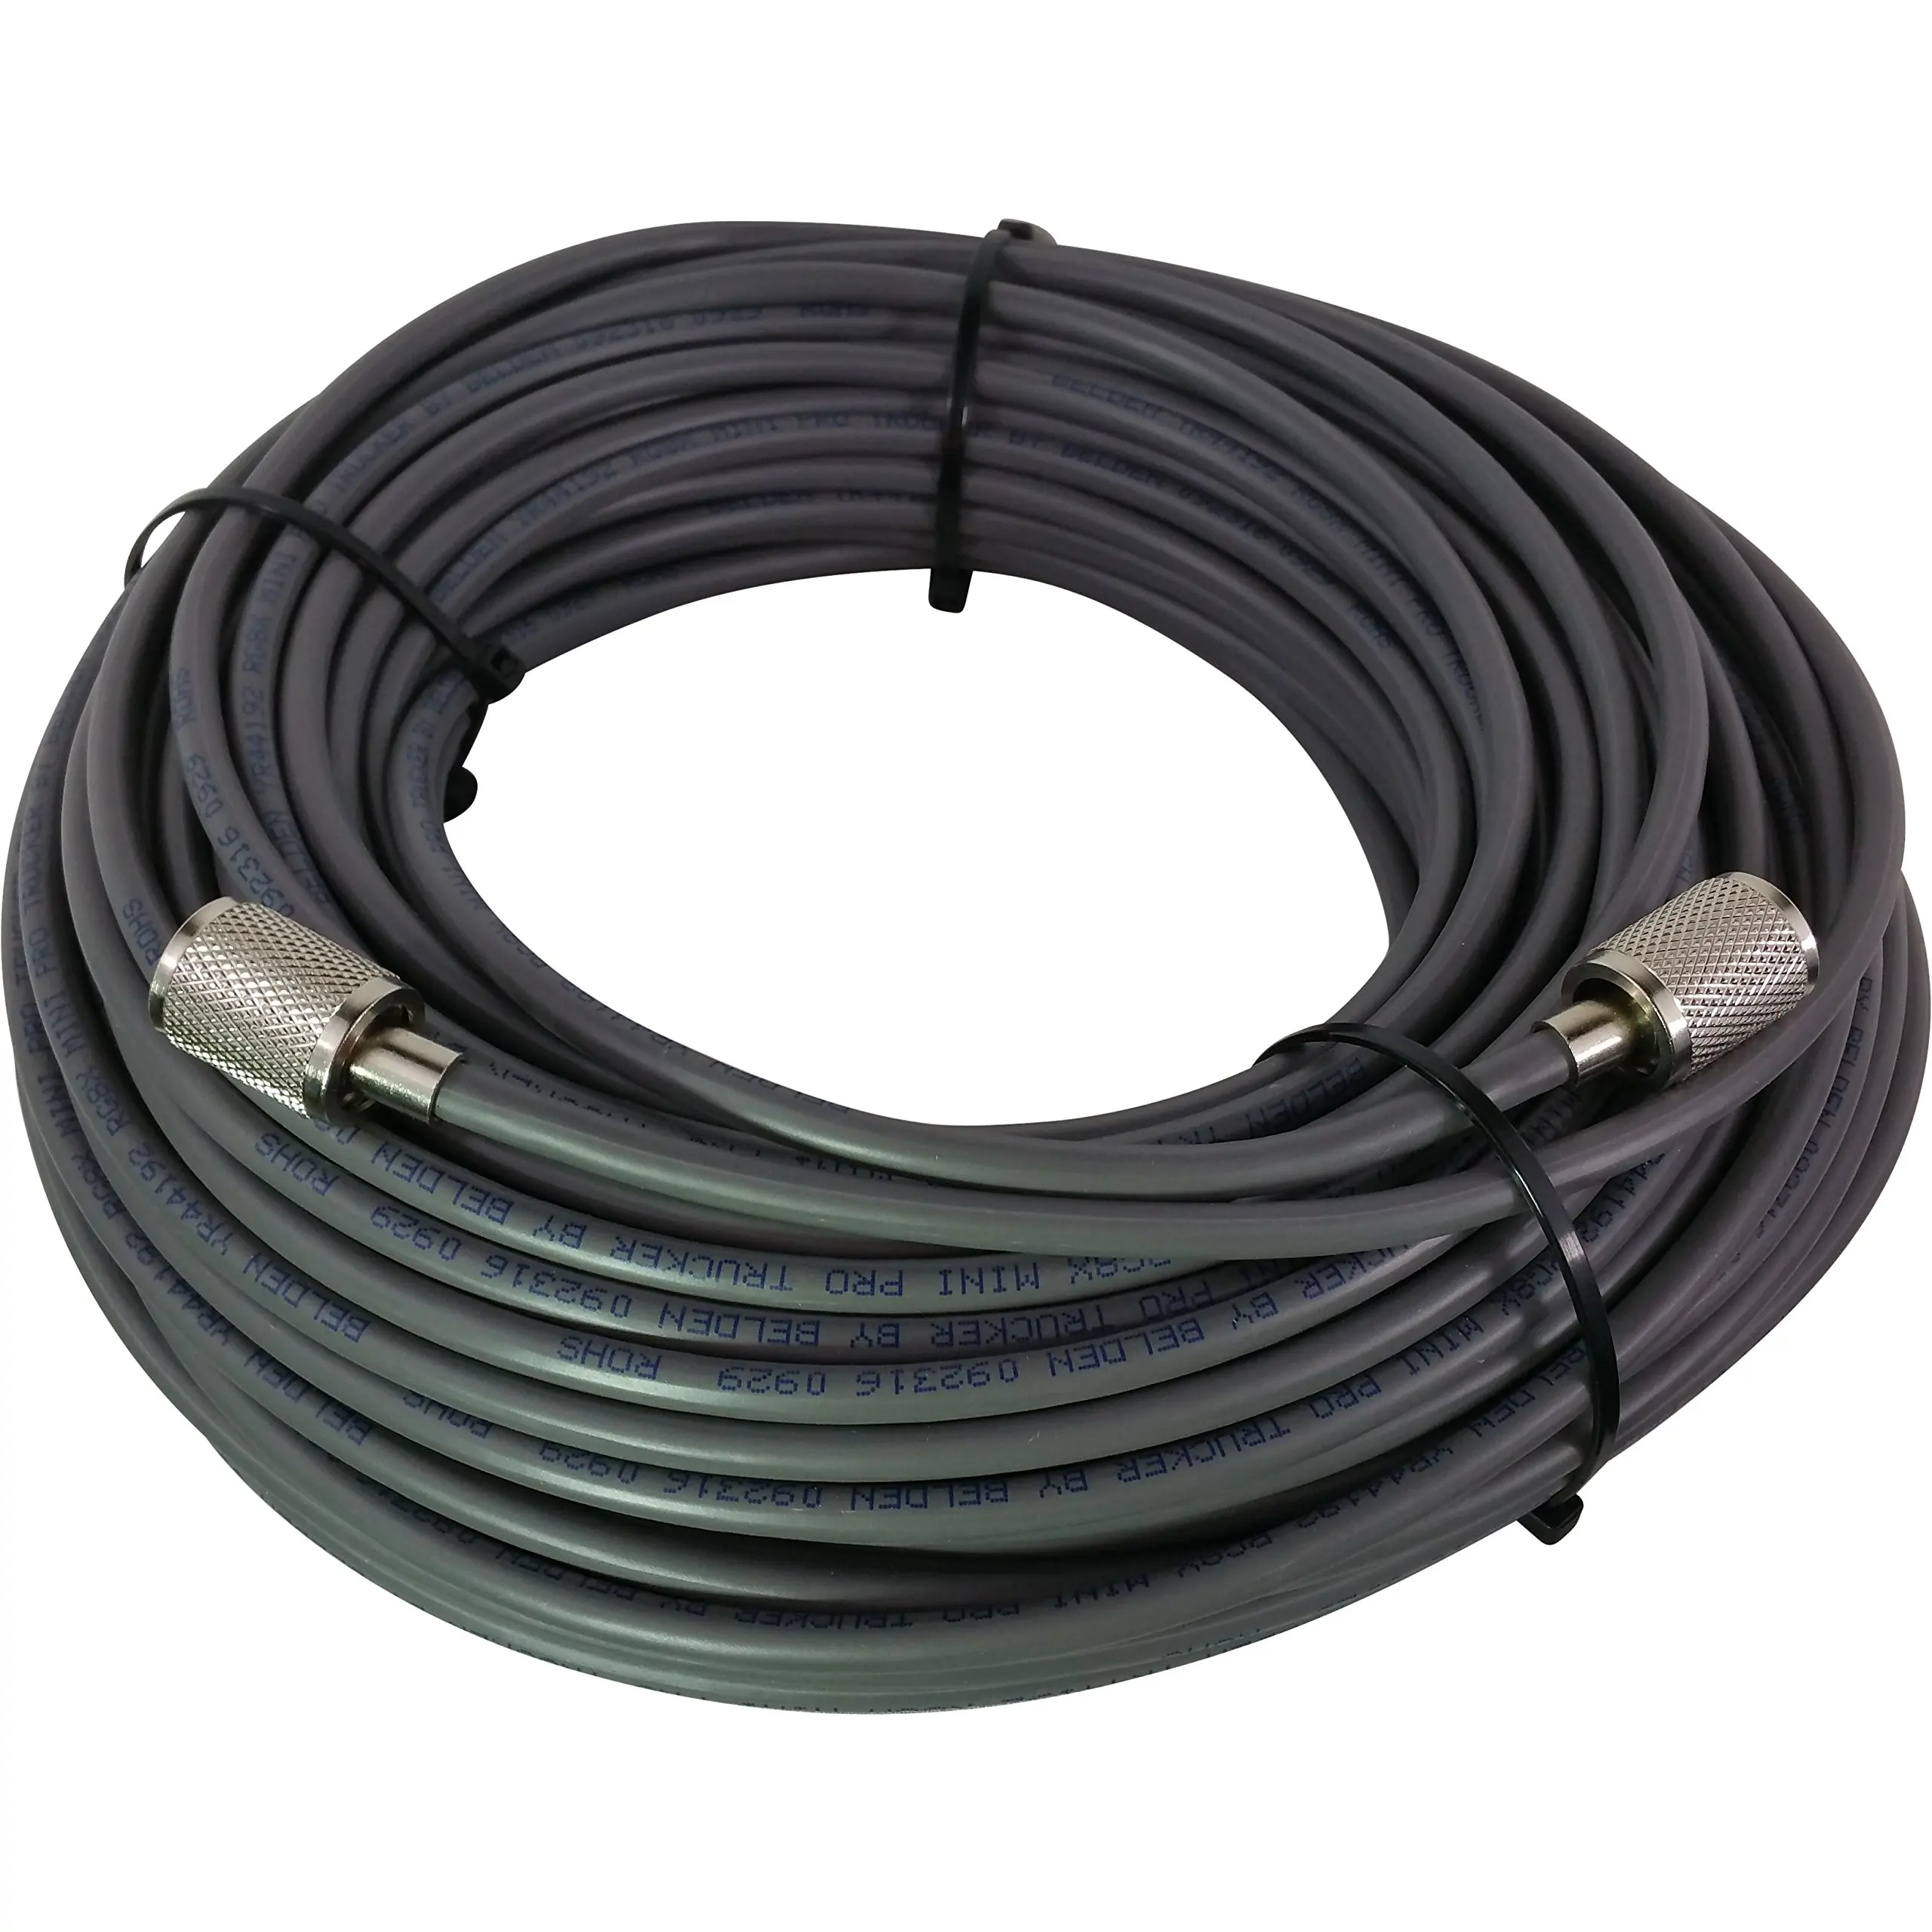 RG 8x кабель. Разъем для кабеля Belden RG-11. RG-8x. Coax Cable.